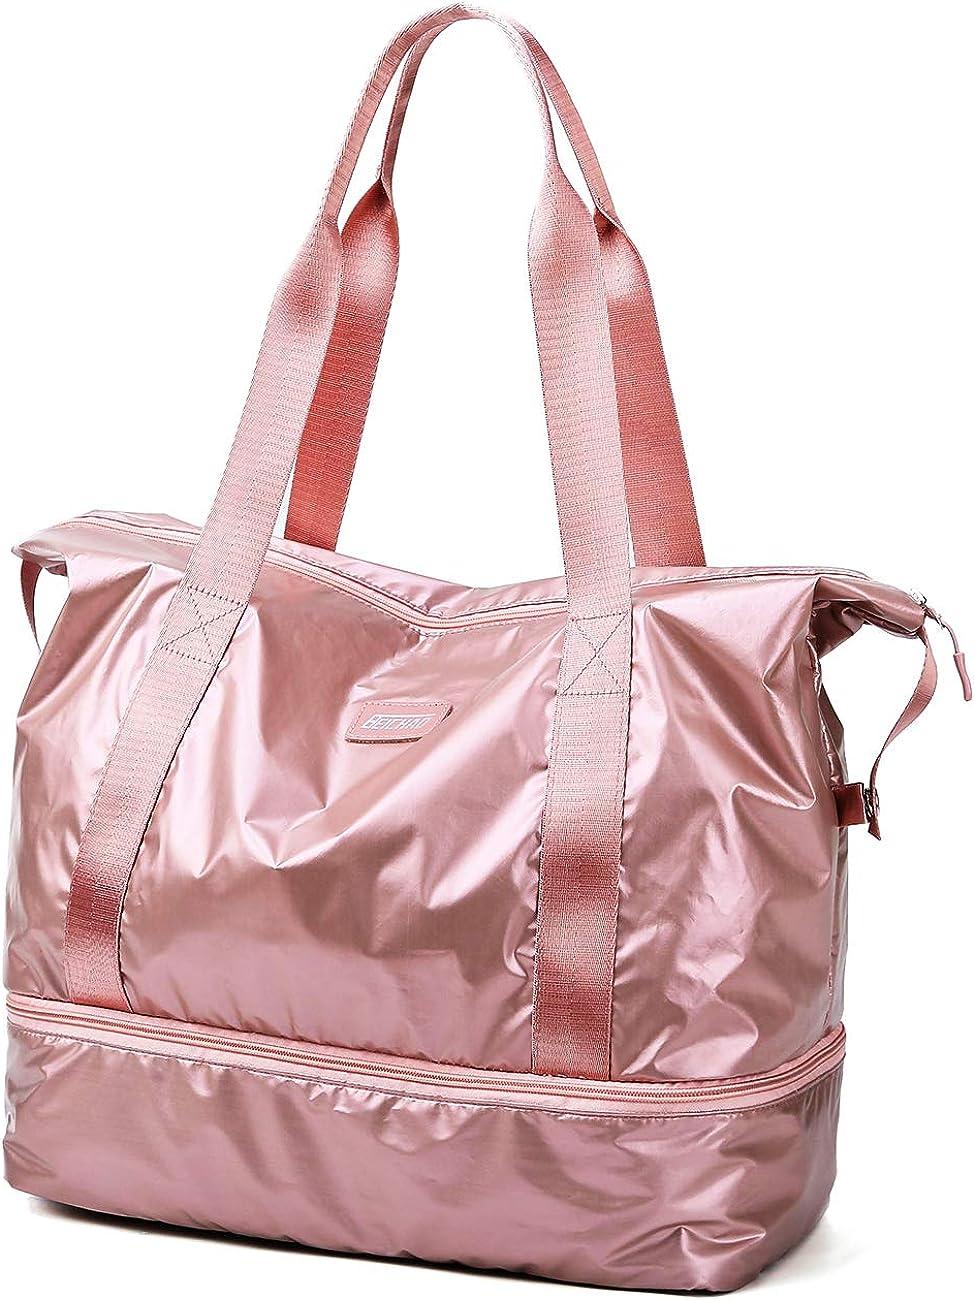 Victoria's Secret Travel Tote Bags